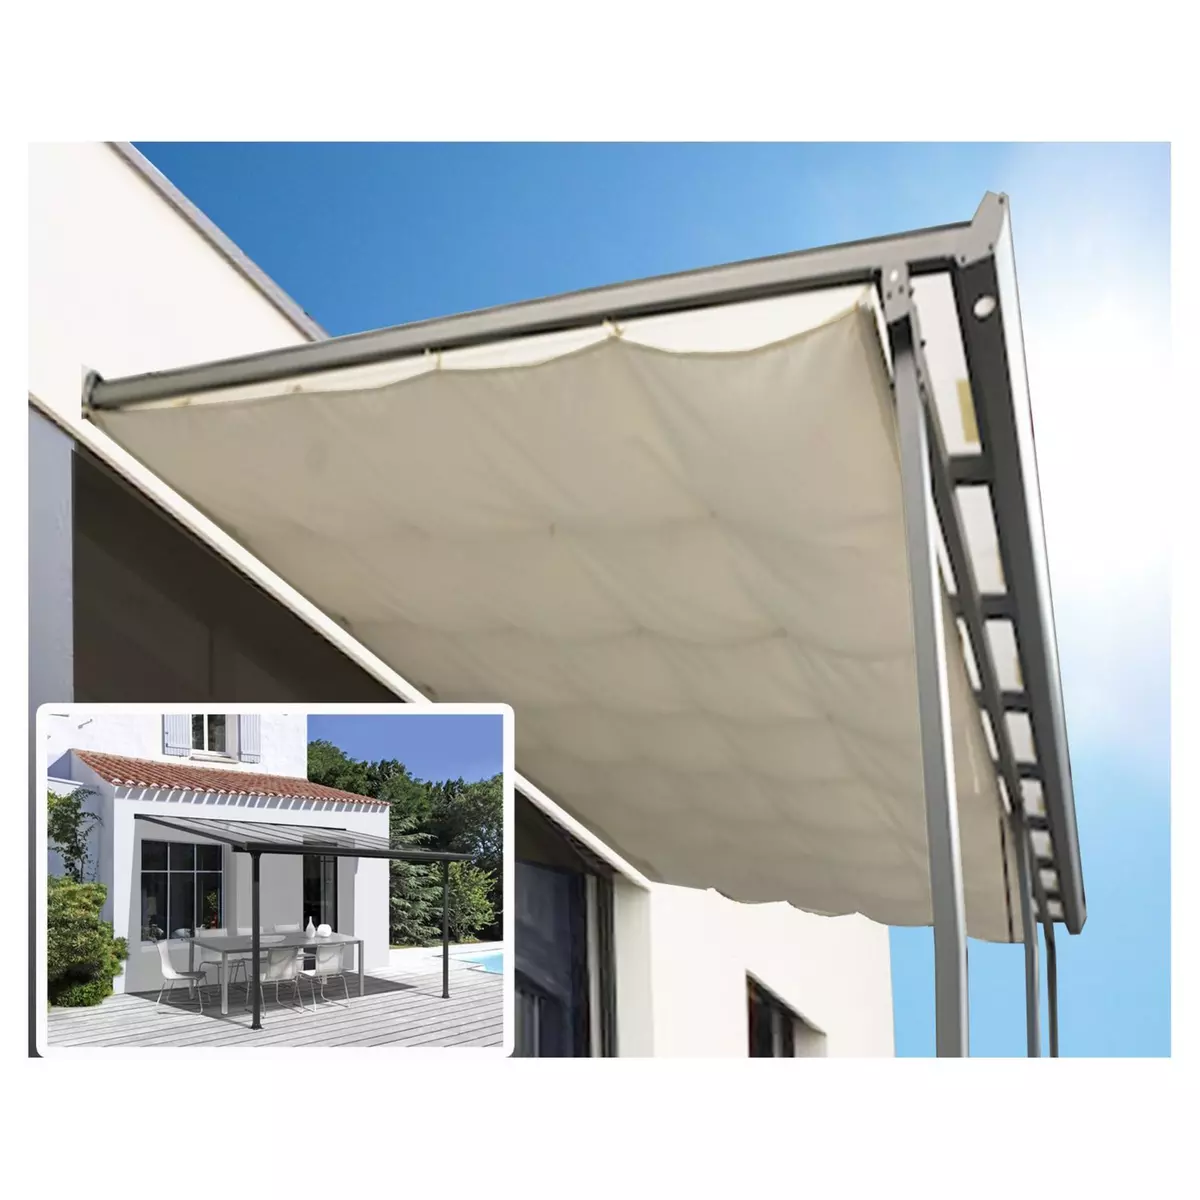 Habrita Toit terrasse avec rideau d'ombrage extensible - Aluminium - 9,21m²